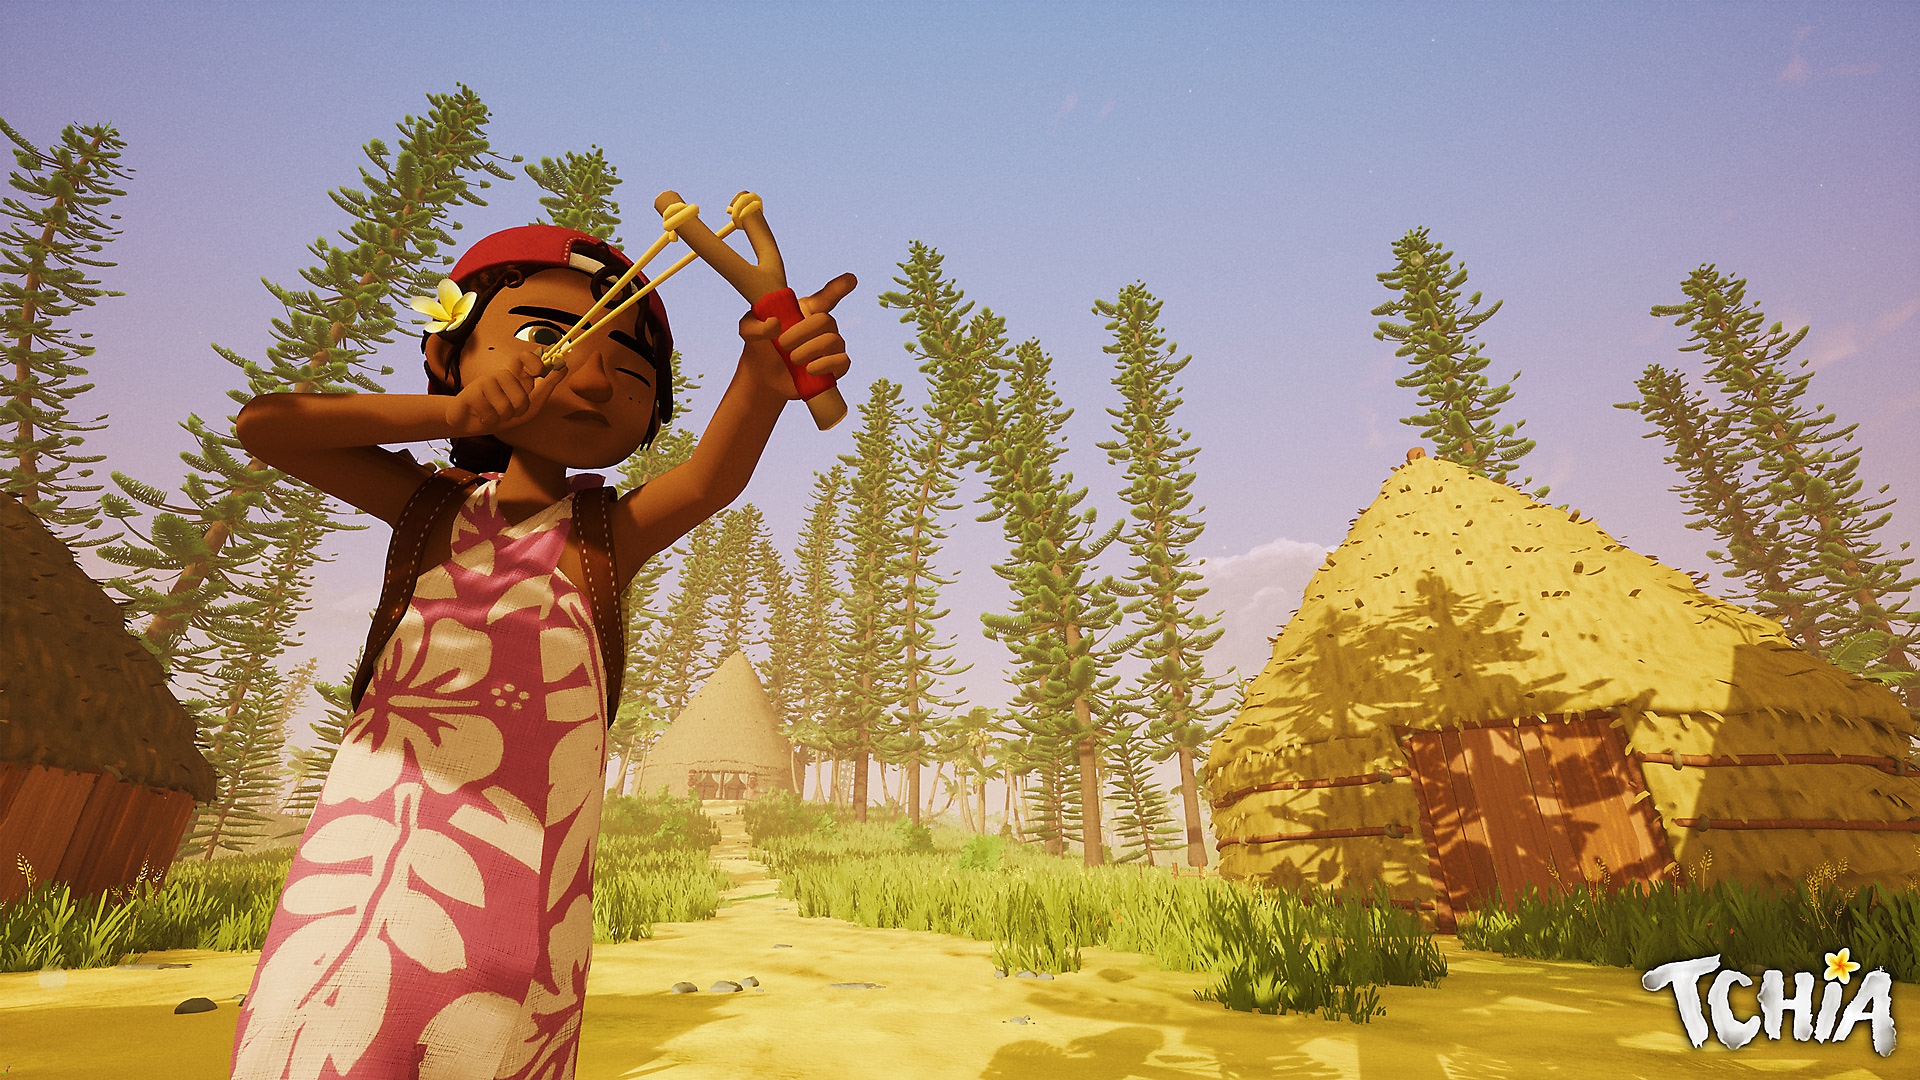 Tchia screenshot showing main character holding a slingshot